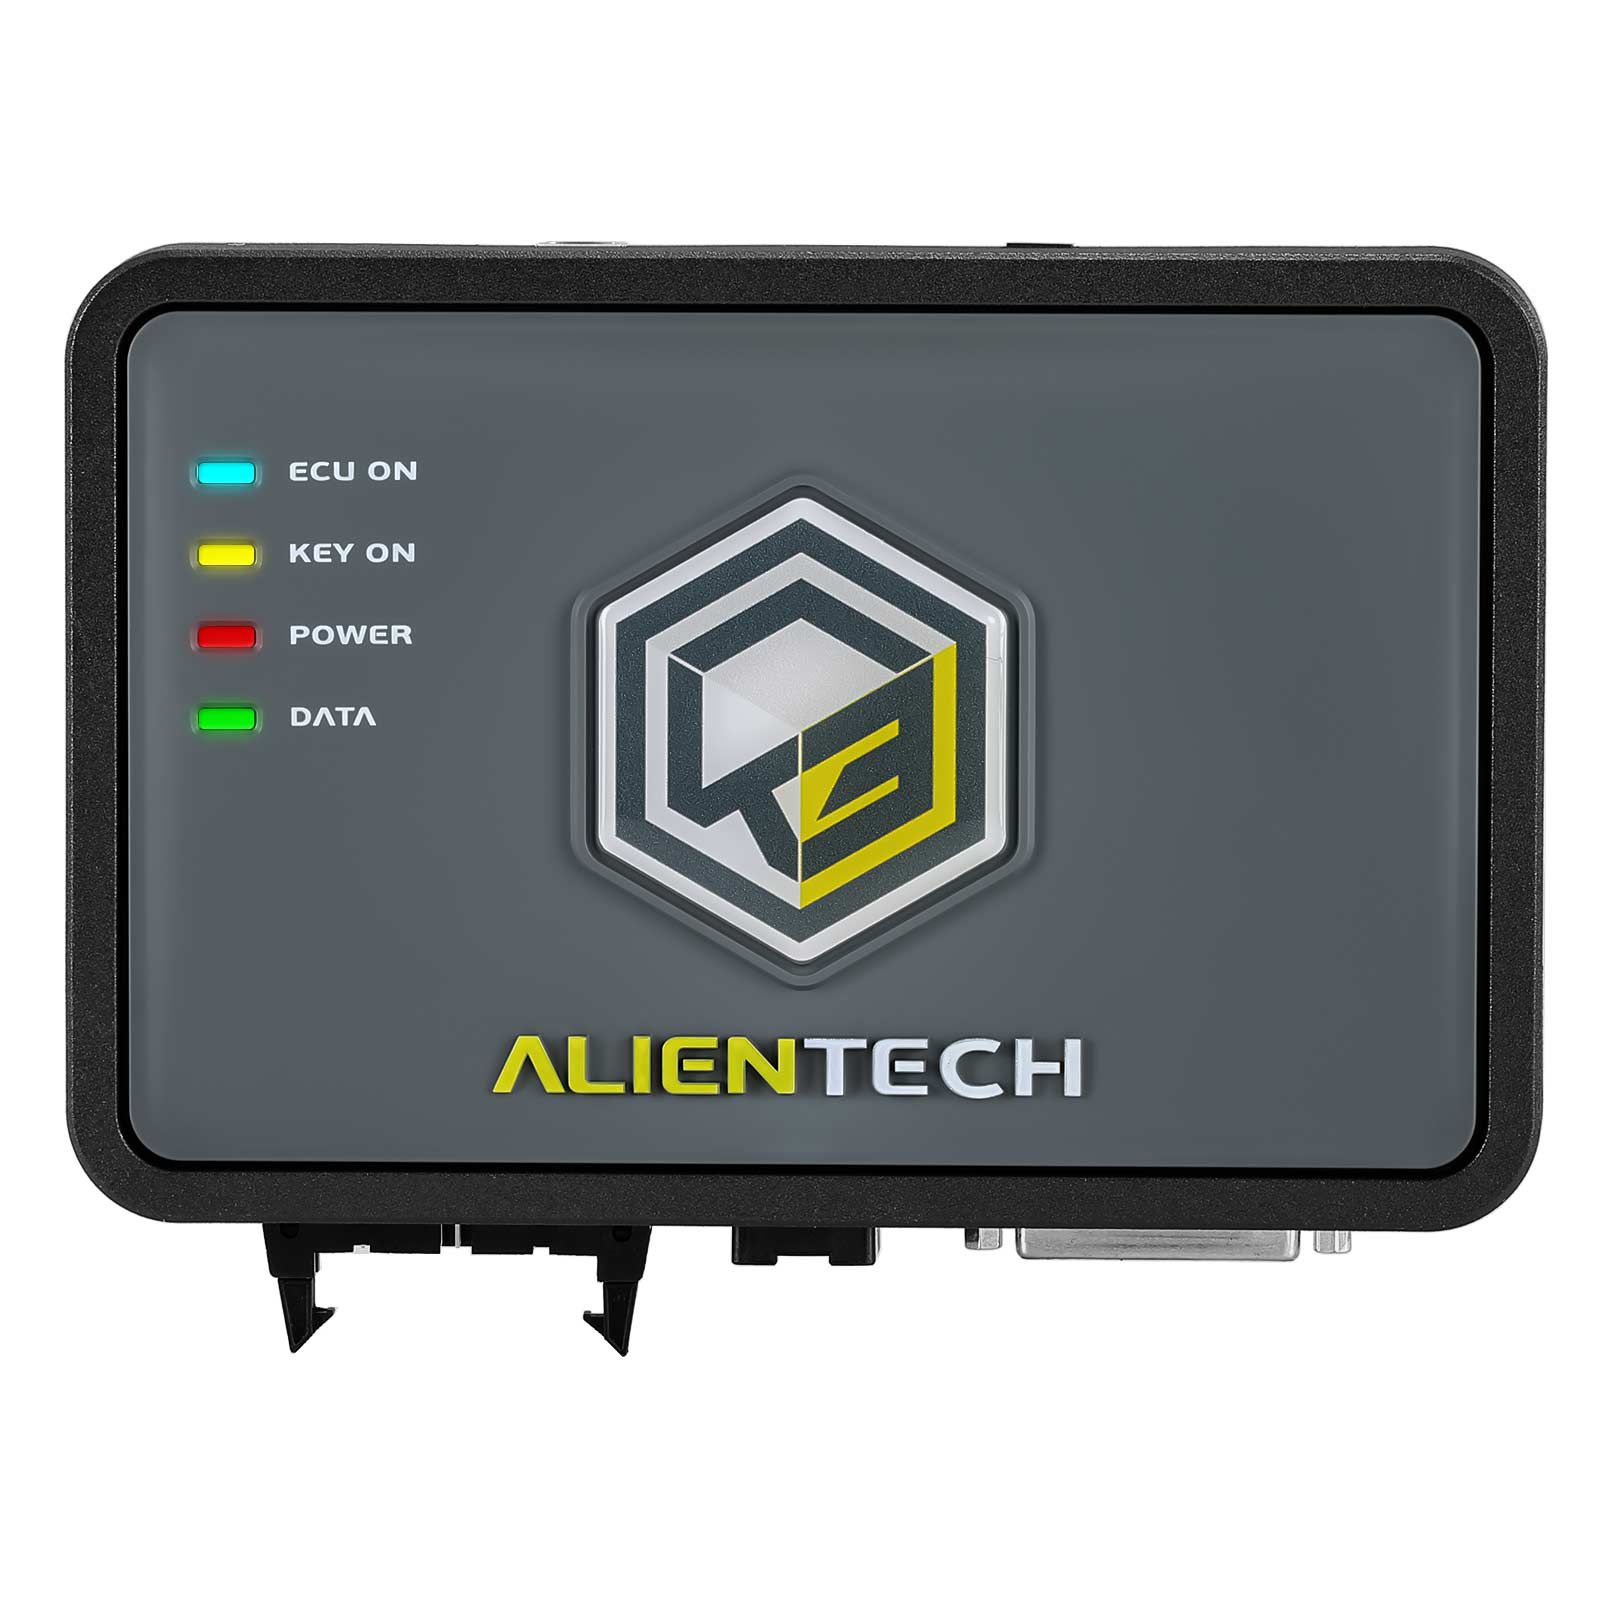 Original Alientech KESS V3 KESS3 Slave Version ECU and TCU Programming Tool with Car OBD-Bench-Boot LCV Protocol Authorization